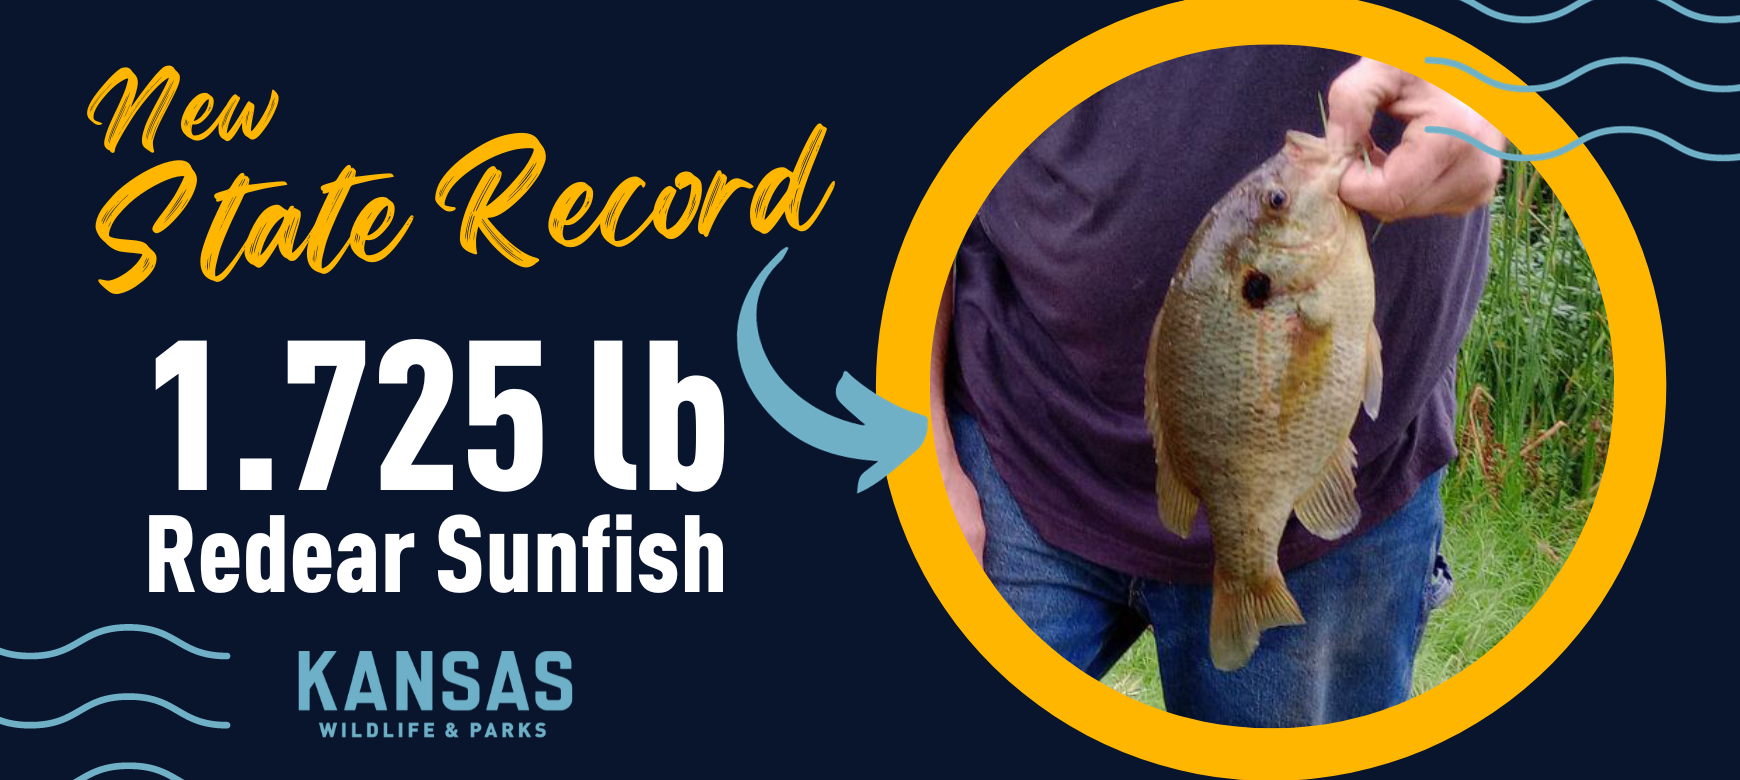 Record fish caught at Kansas reservoir